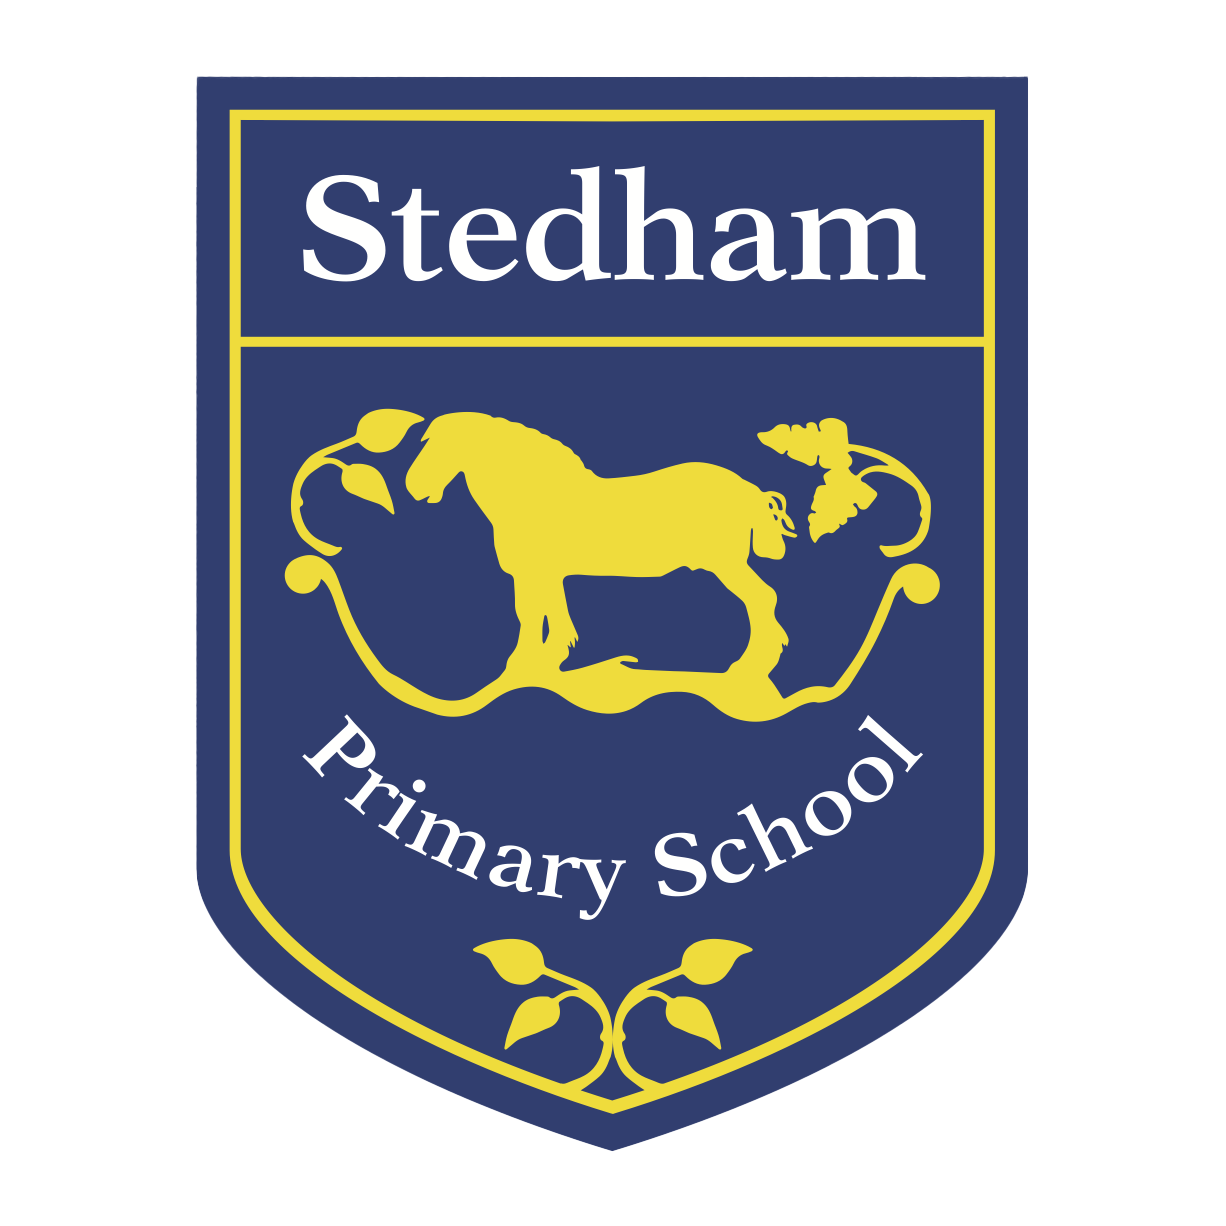 Stedham Primary School